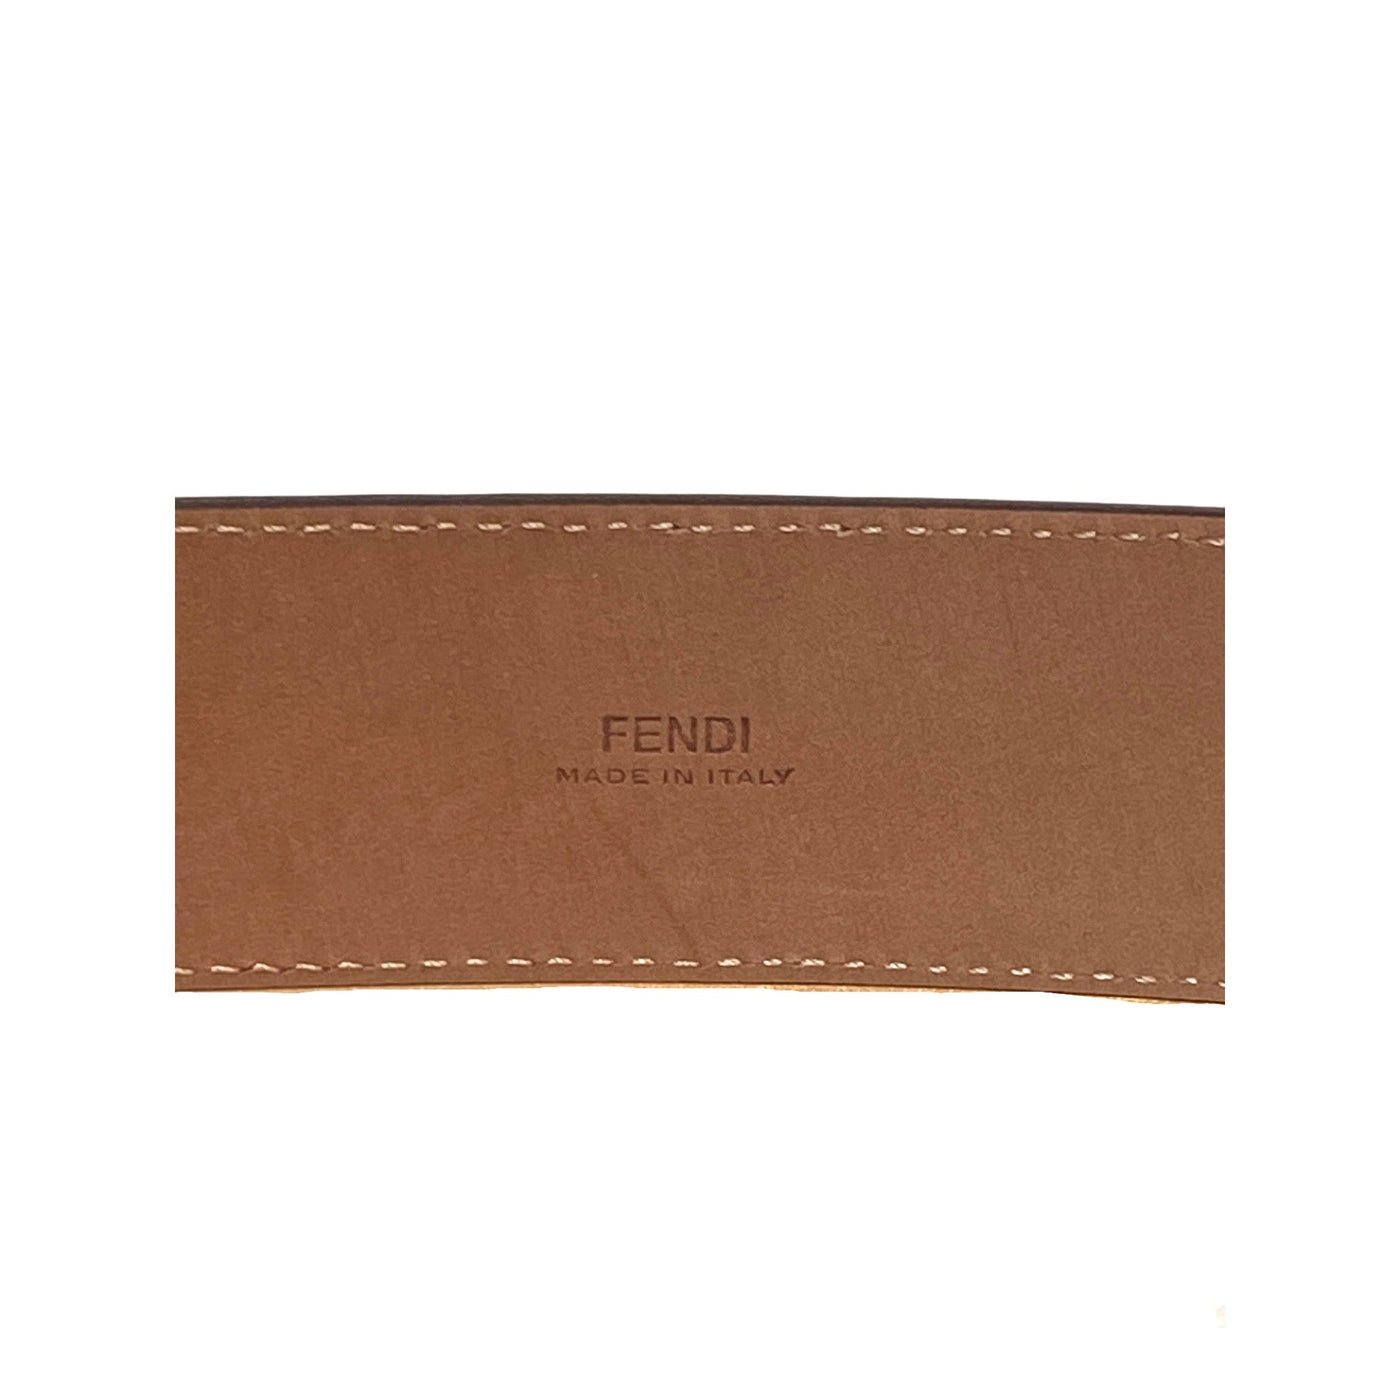 Fendi FF Logo Ebano Brown Pebbled Leather Belt 105 7C0403 - LUXURYMRKT